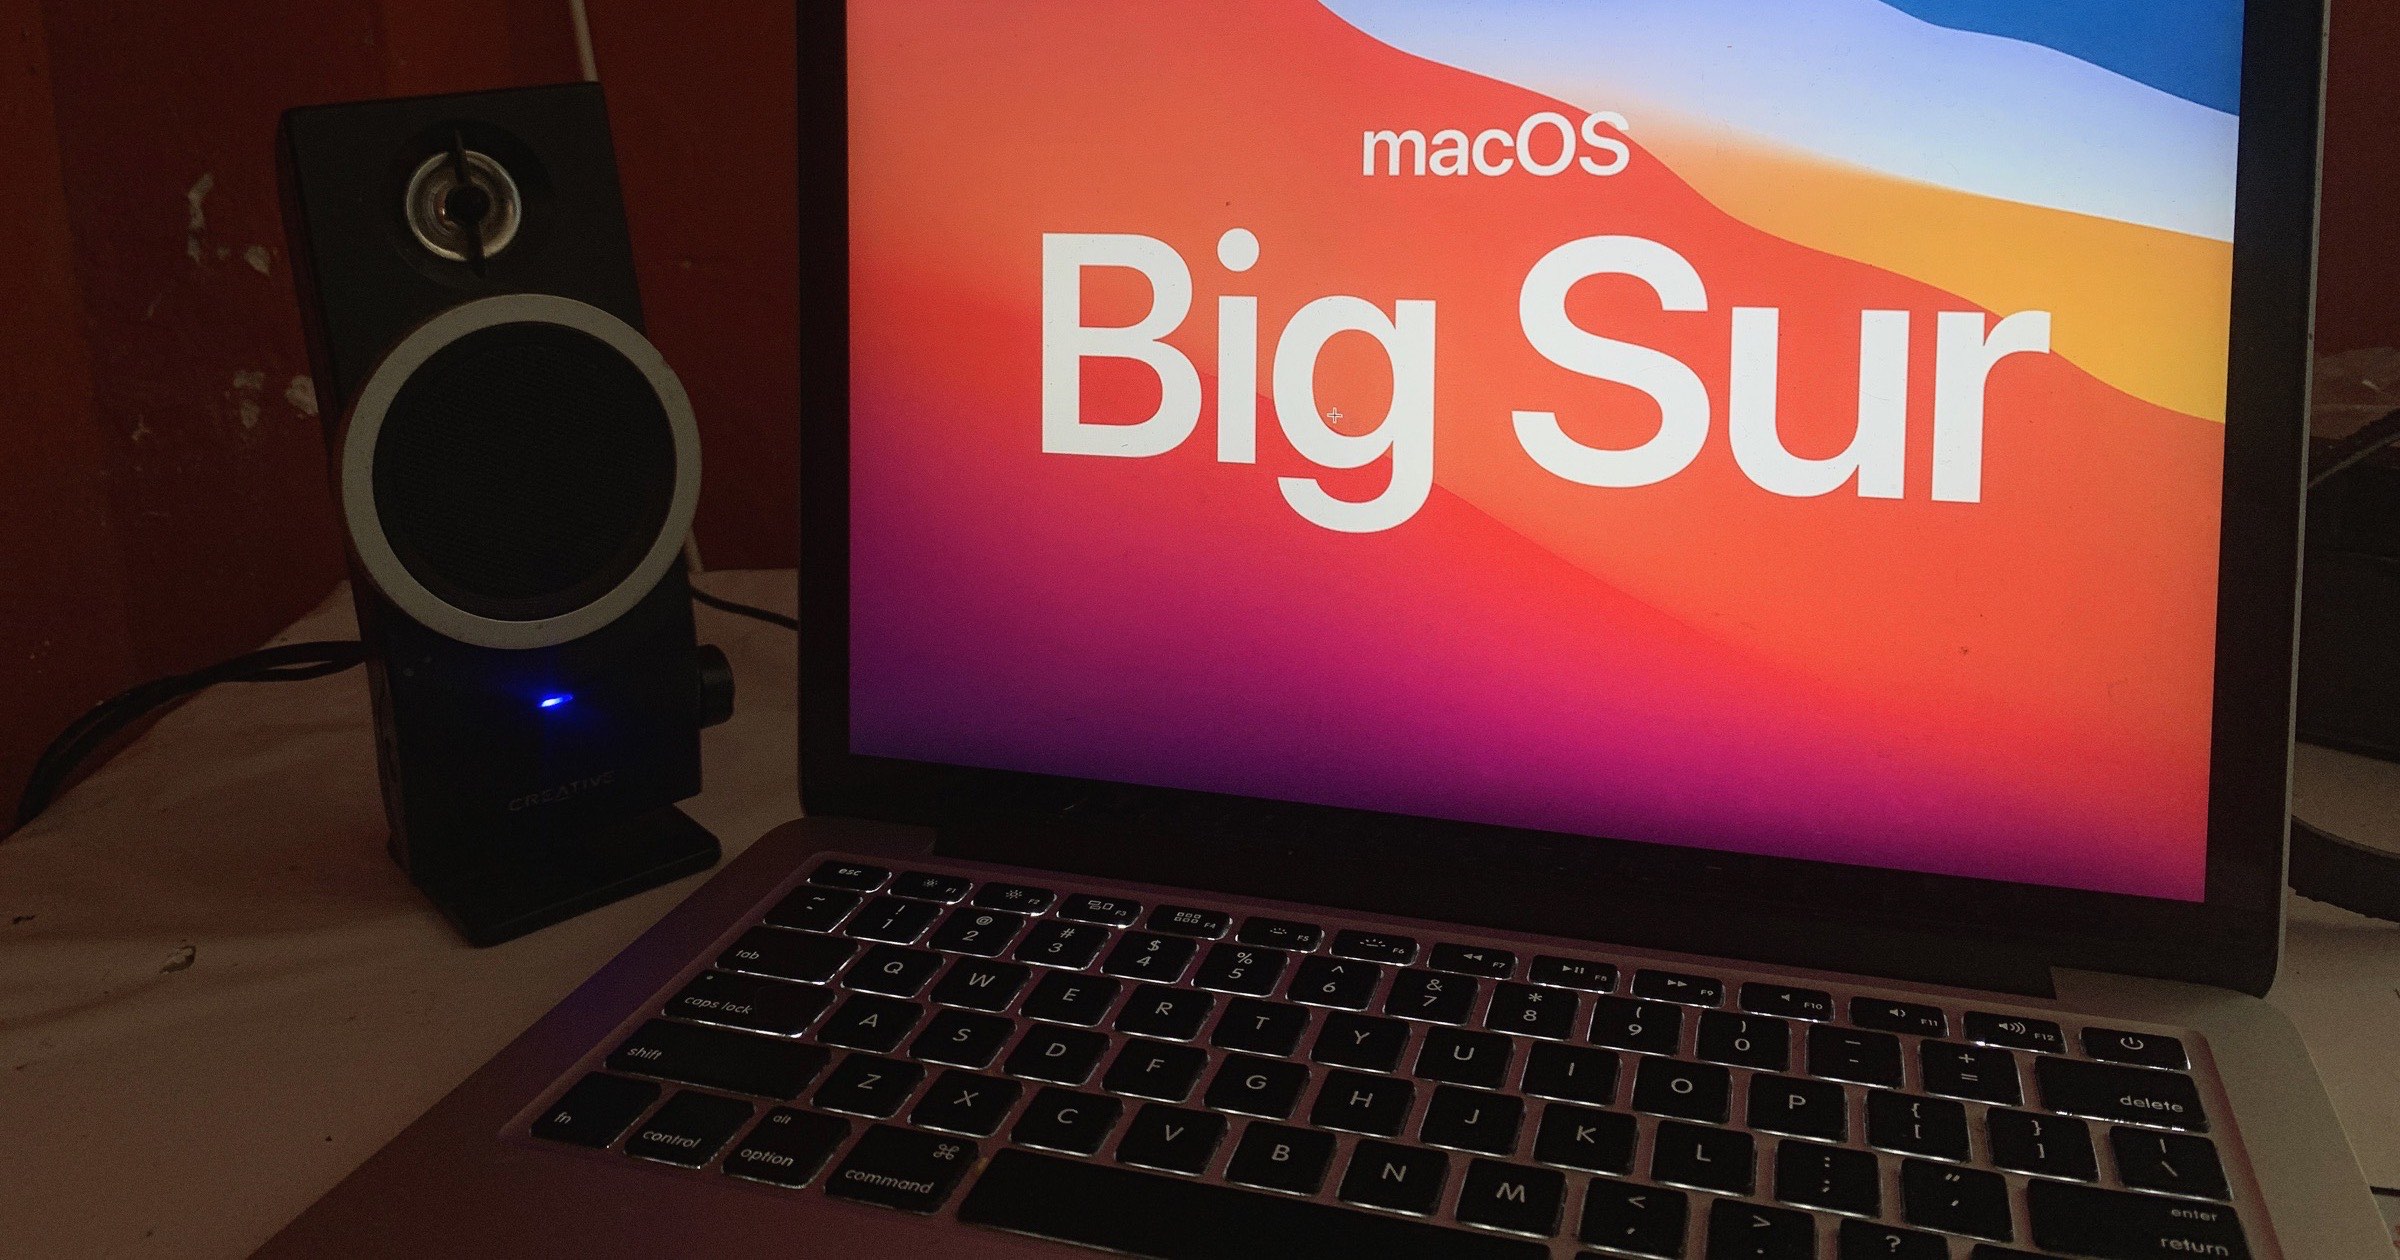 The Secret Security Features in macOS Big Sur